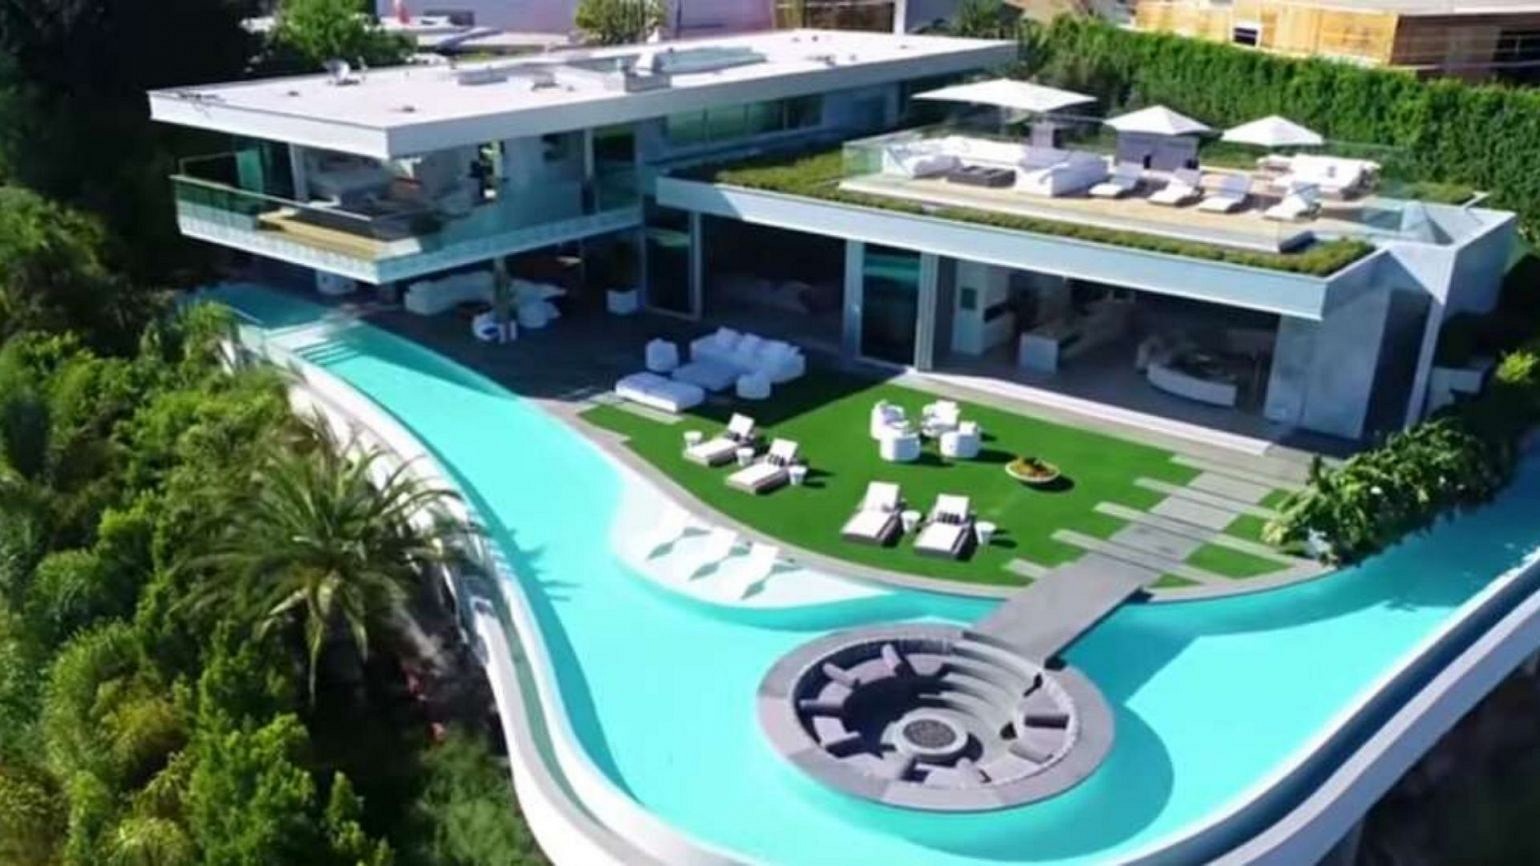 LeBron James new mansion Infinity pool, golf simulator, wine cellar